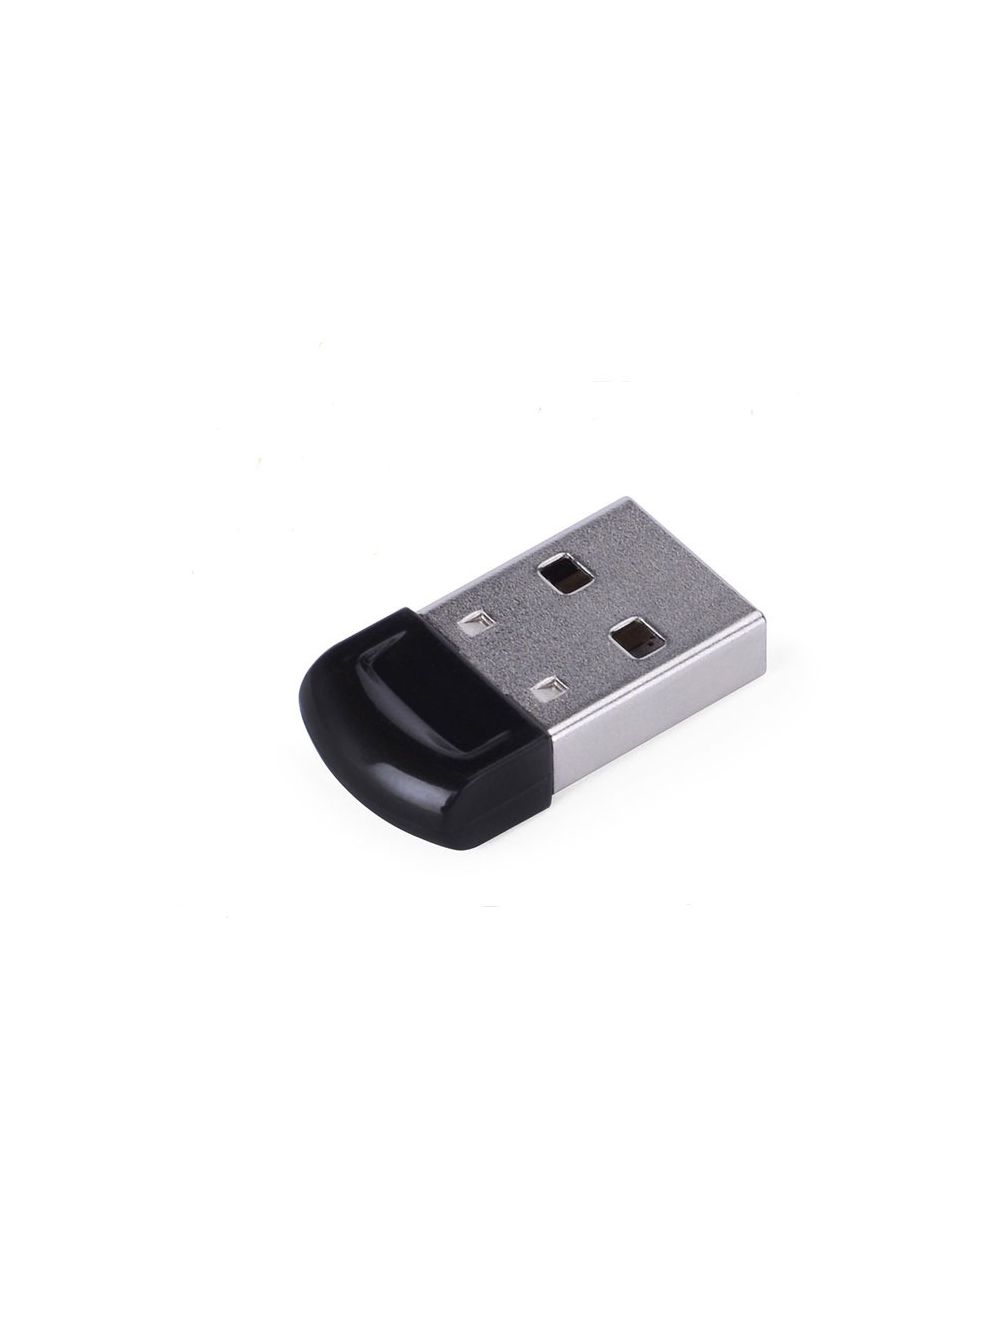 Avantree Wireless 4.0 Micro USB Adapter